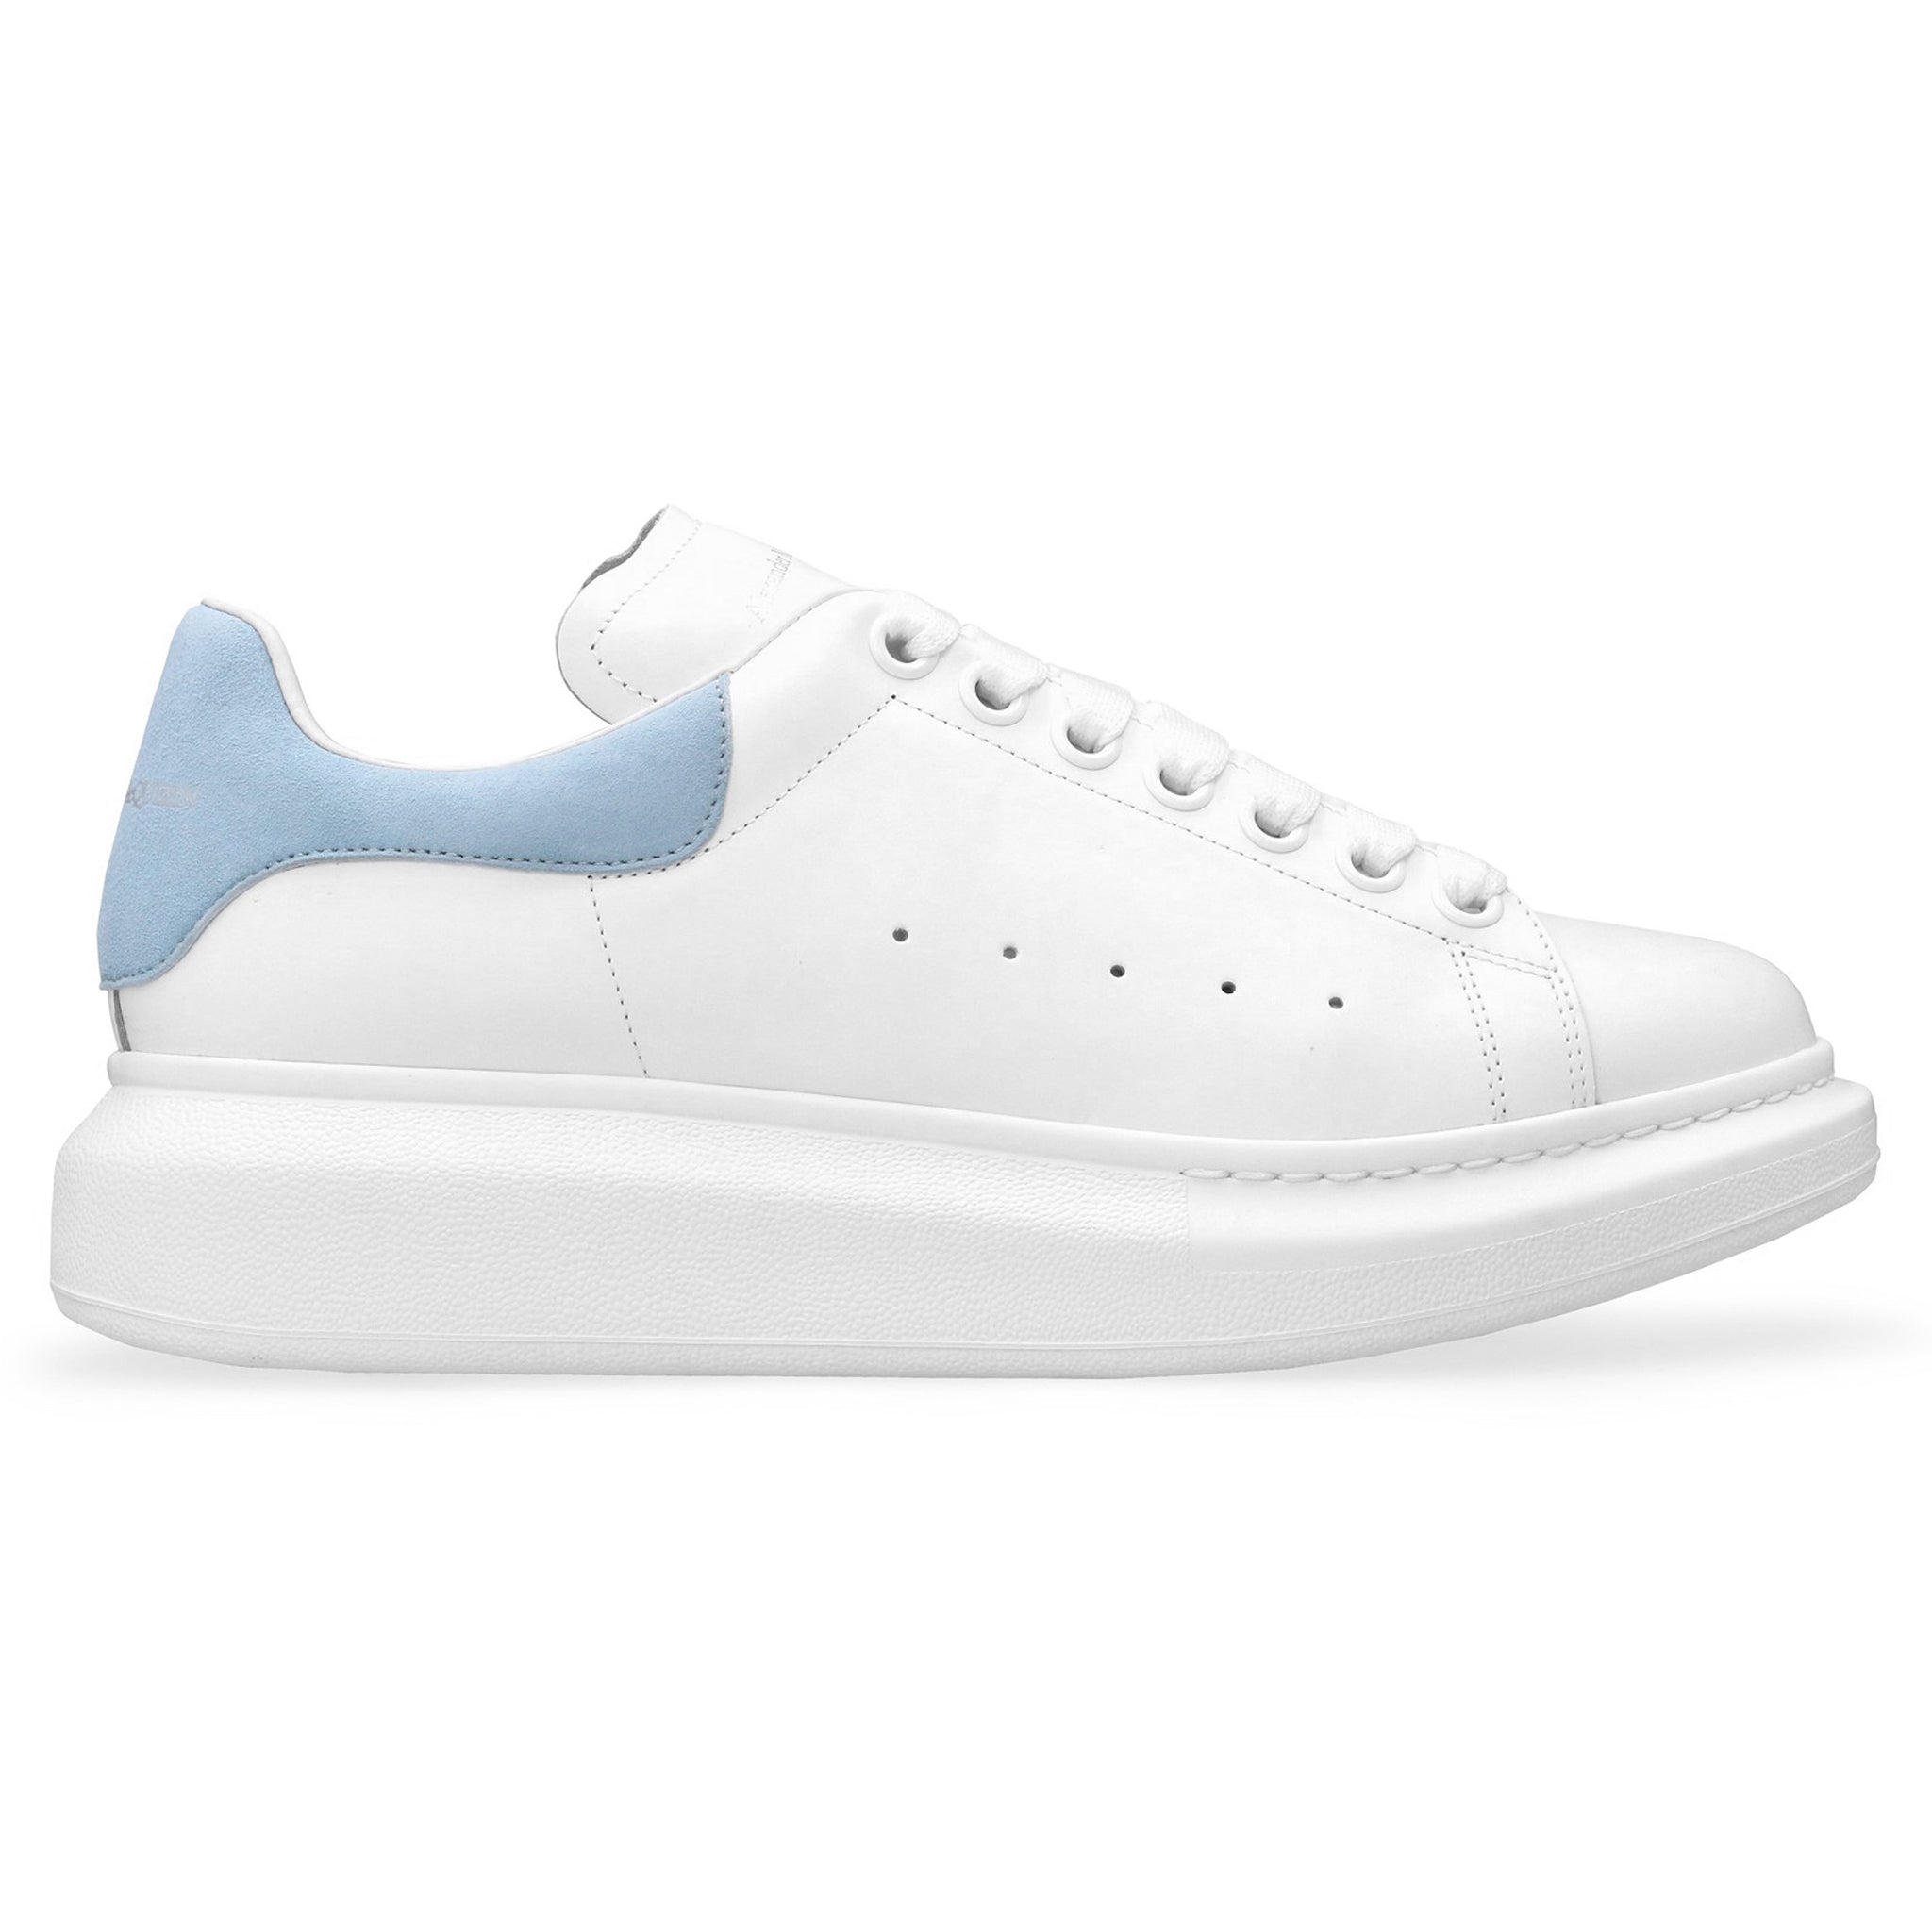 Side view of Alexander Mcqueen Raised Sole White Blue Sneaker